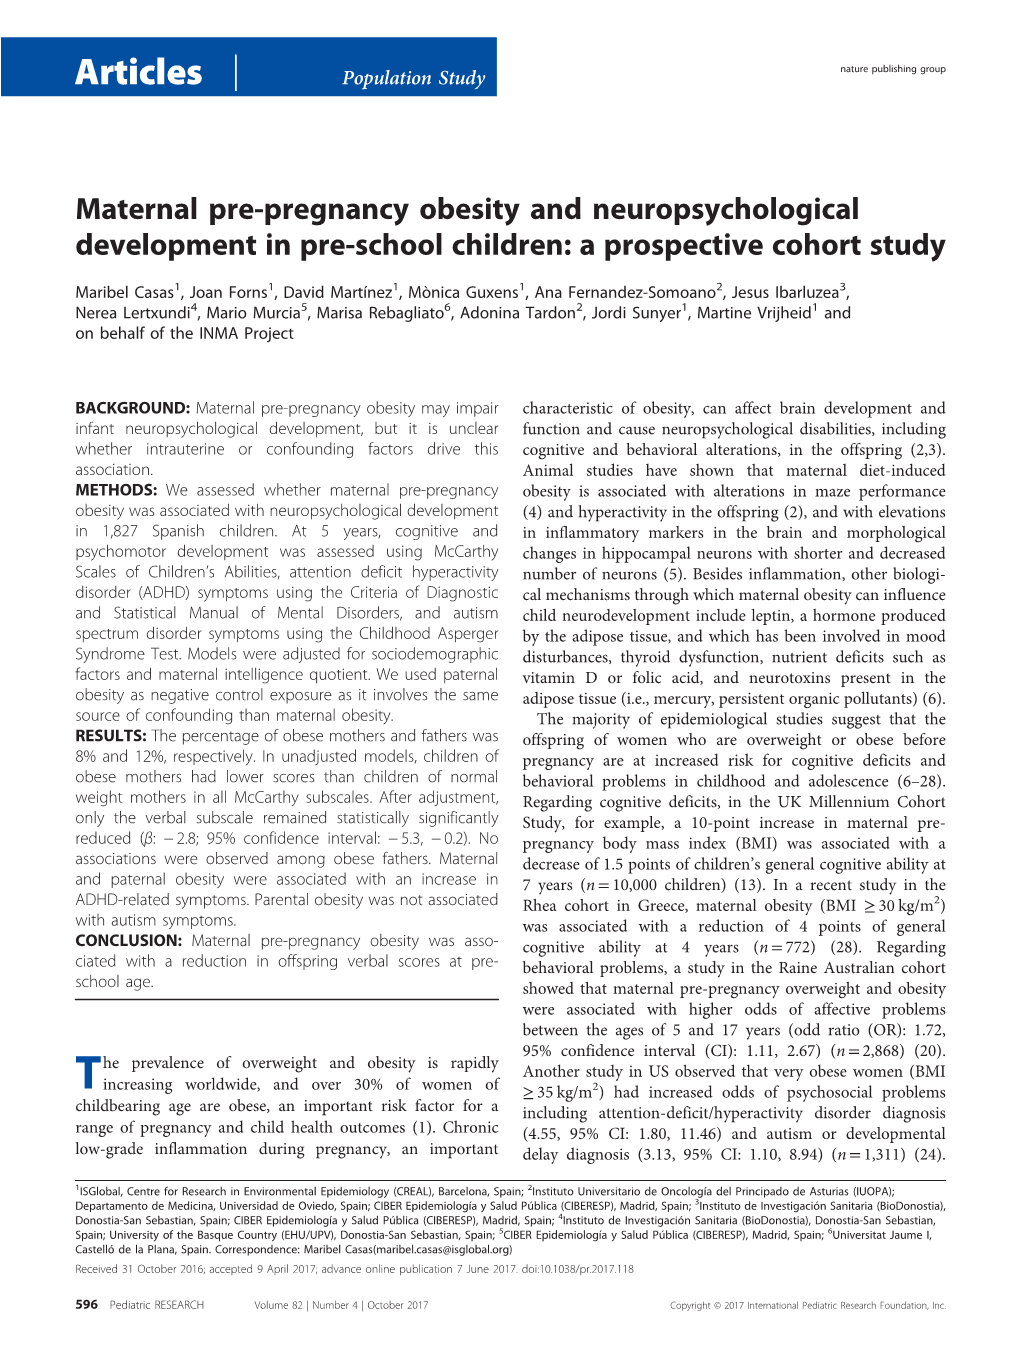 Maternal Pre-Pregnancy Obesity and Neuropsychological Development in Pre-School Children: a Prospective Cohort Study